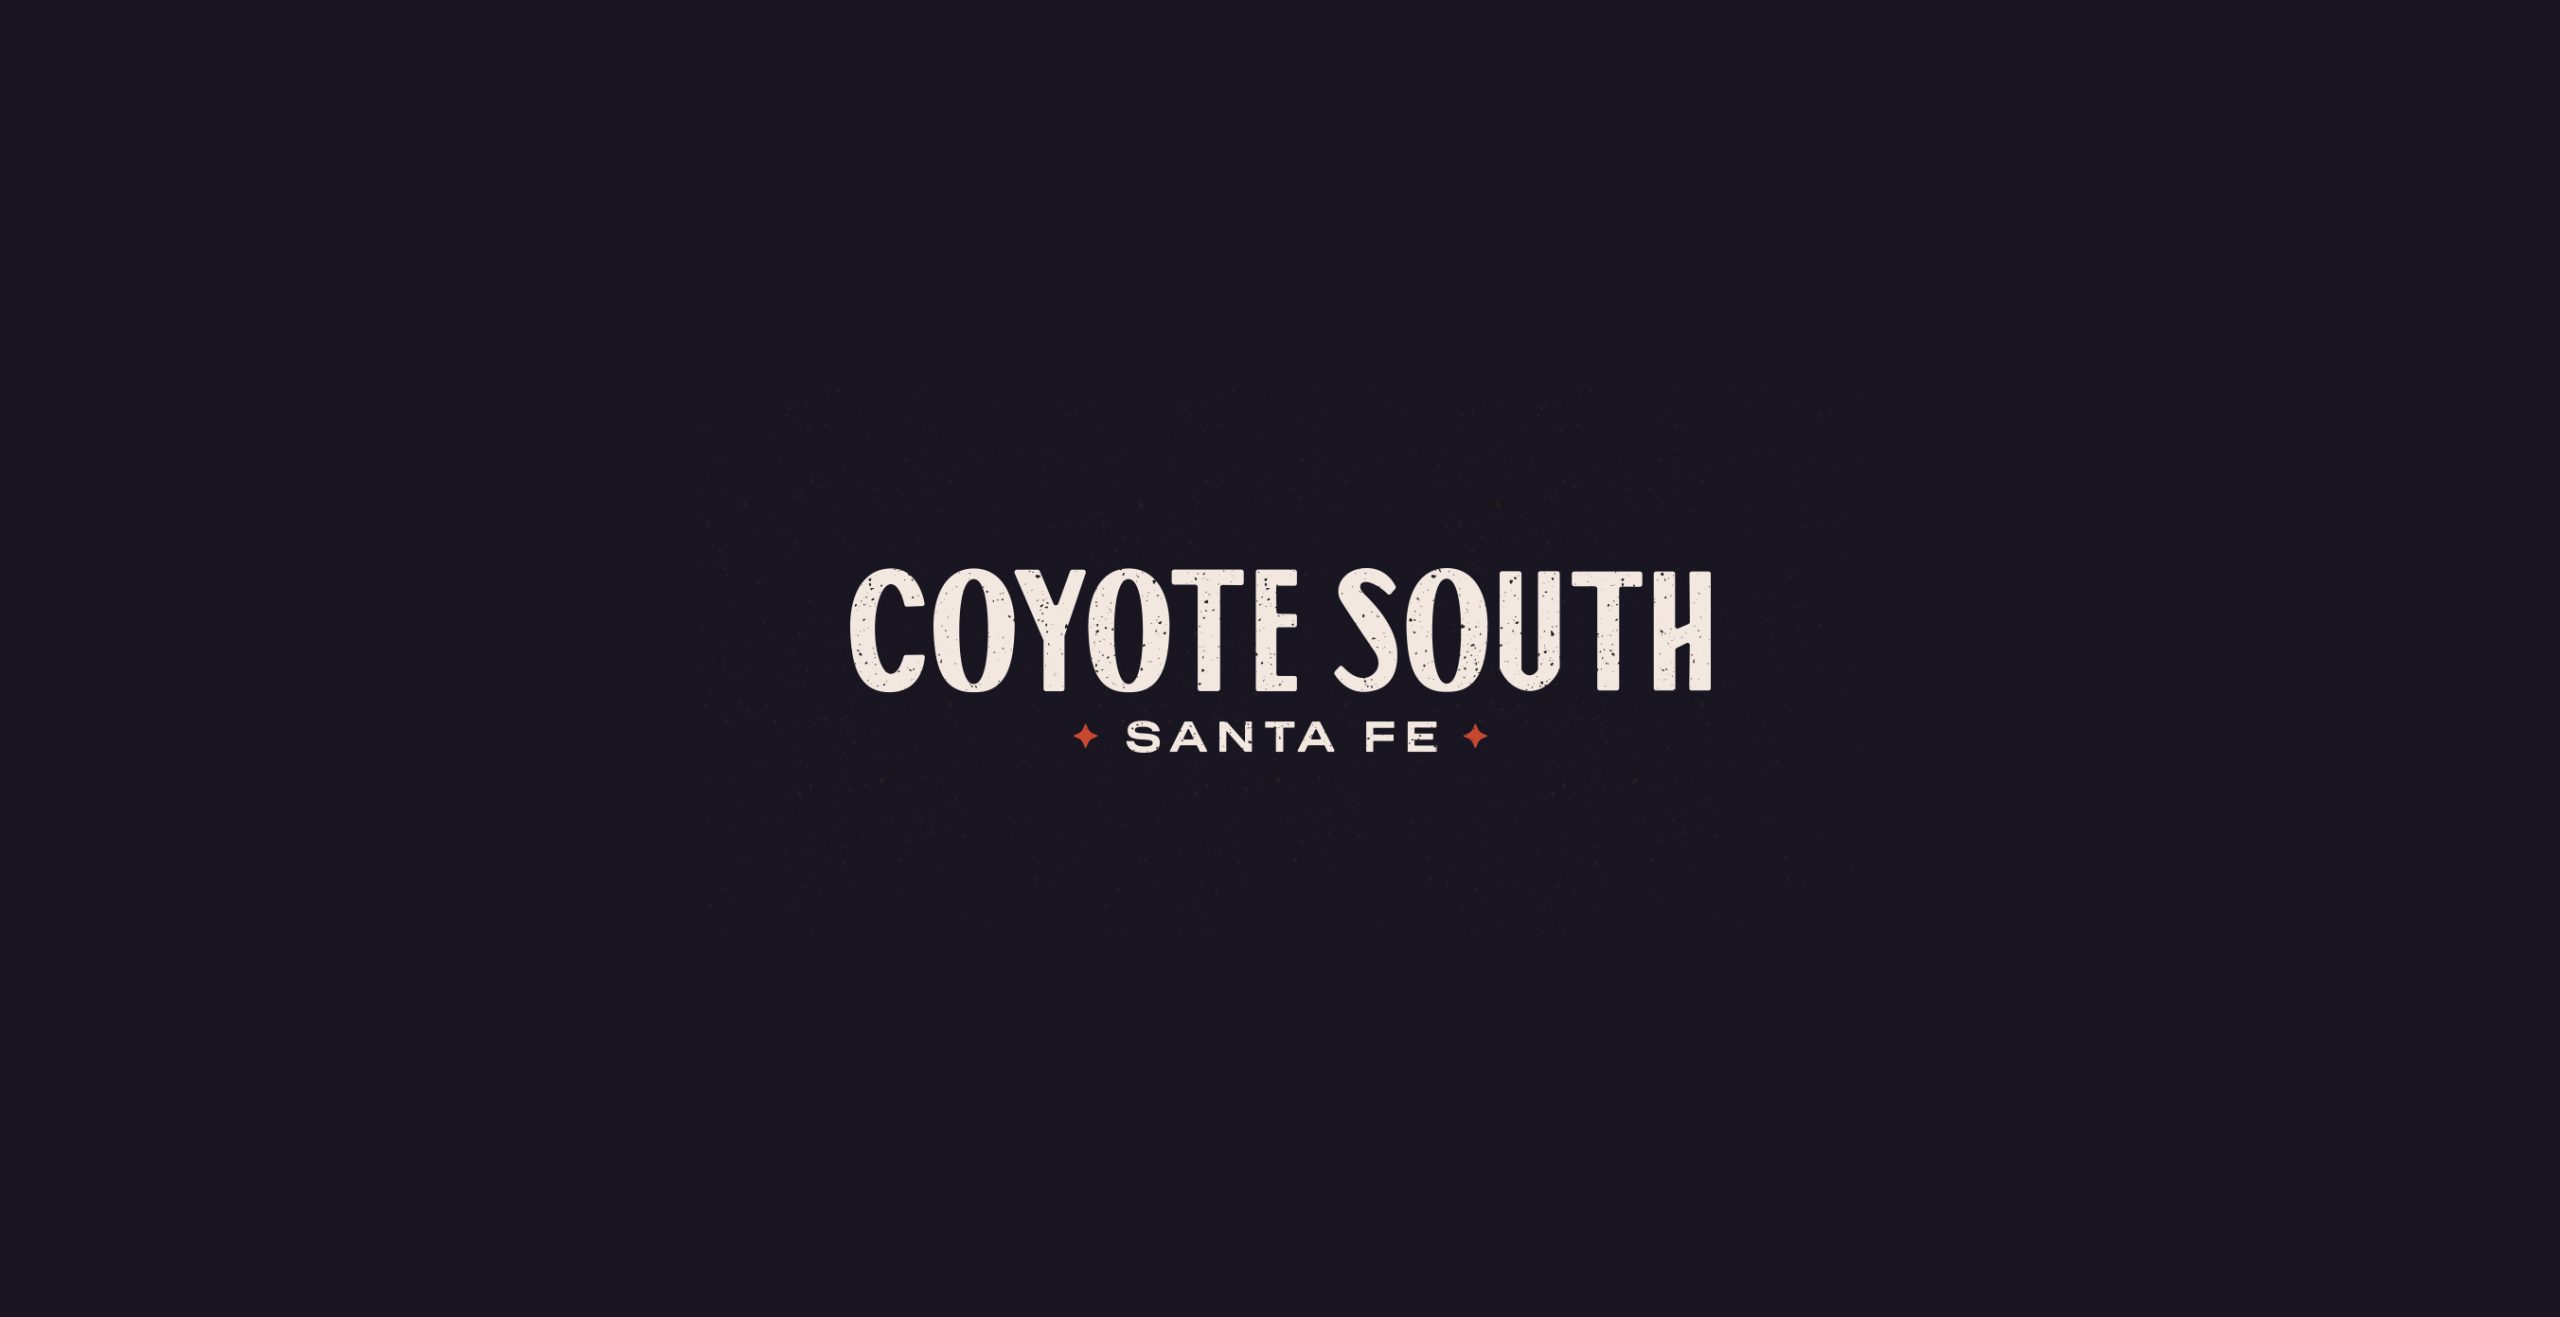 CoyoteSouth BCoPortfolio2020CoyoteSouth2 2 scaled